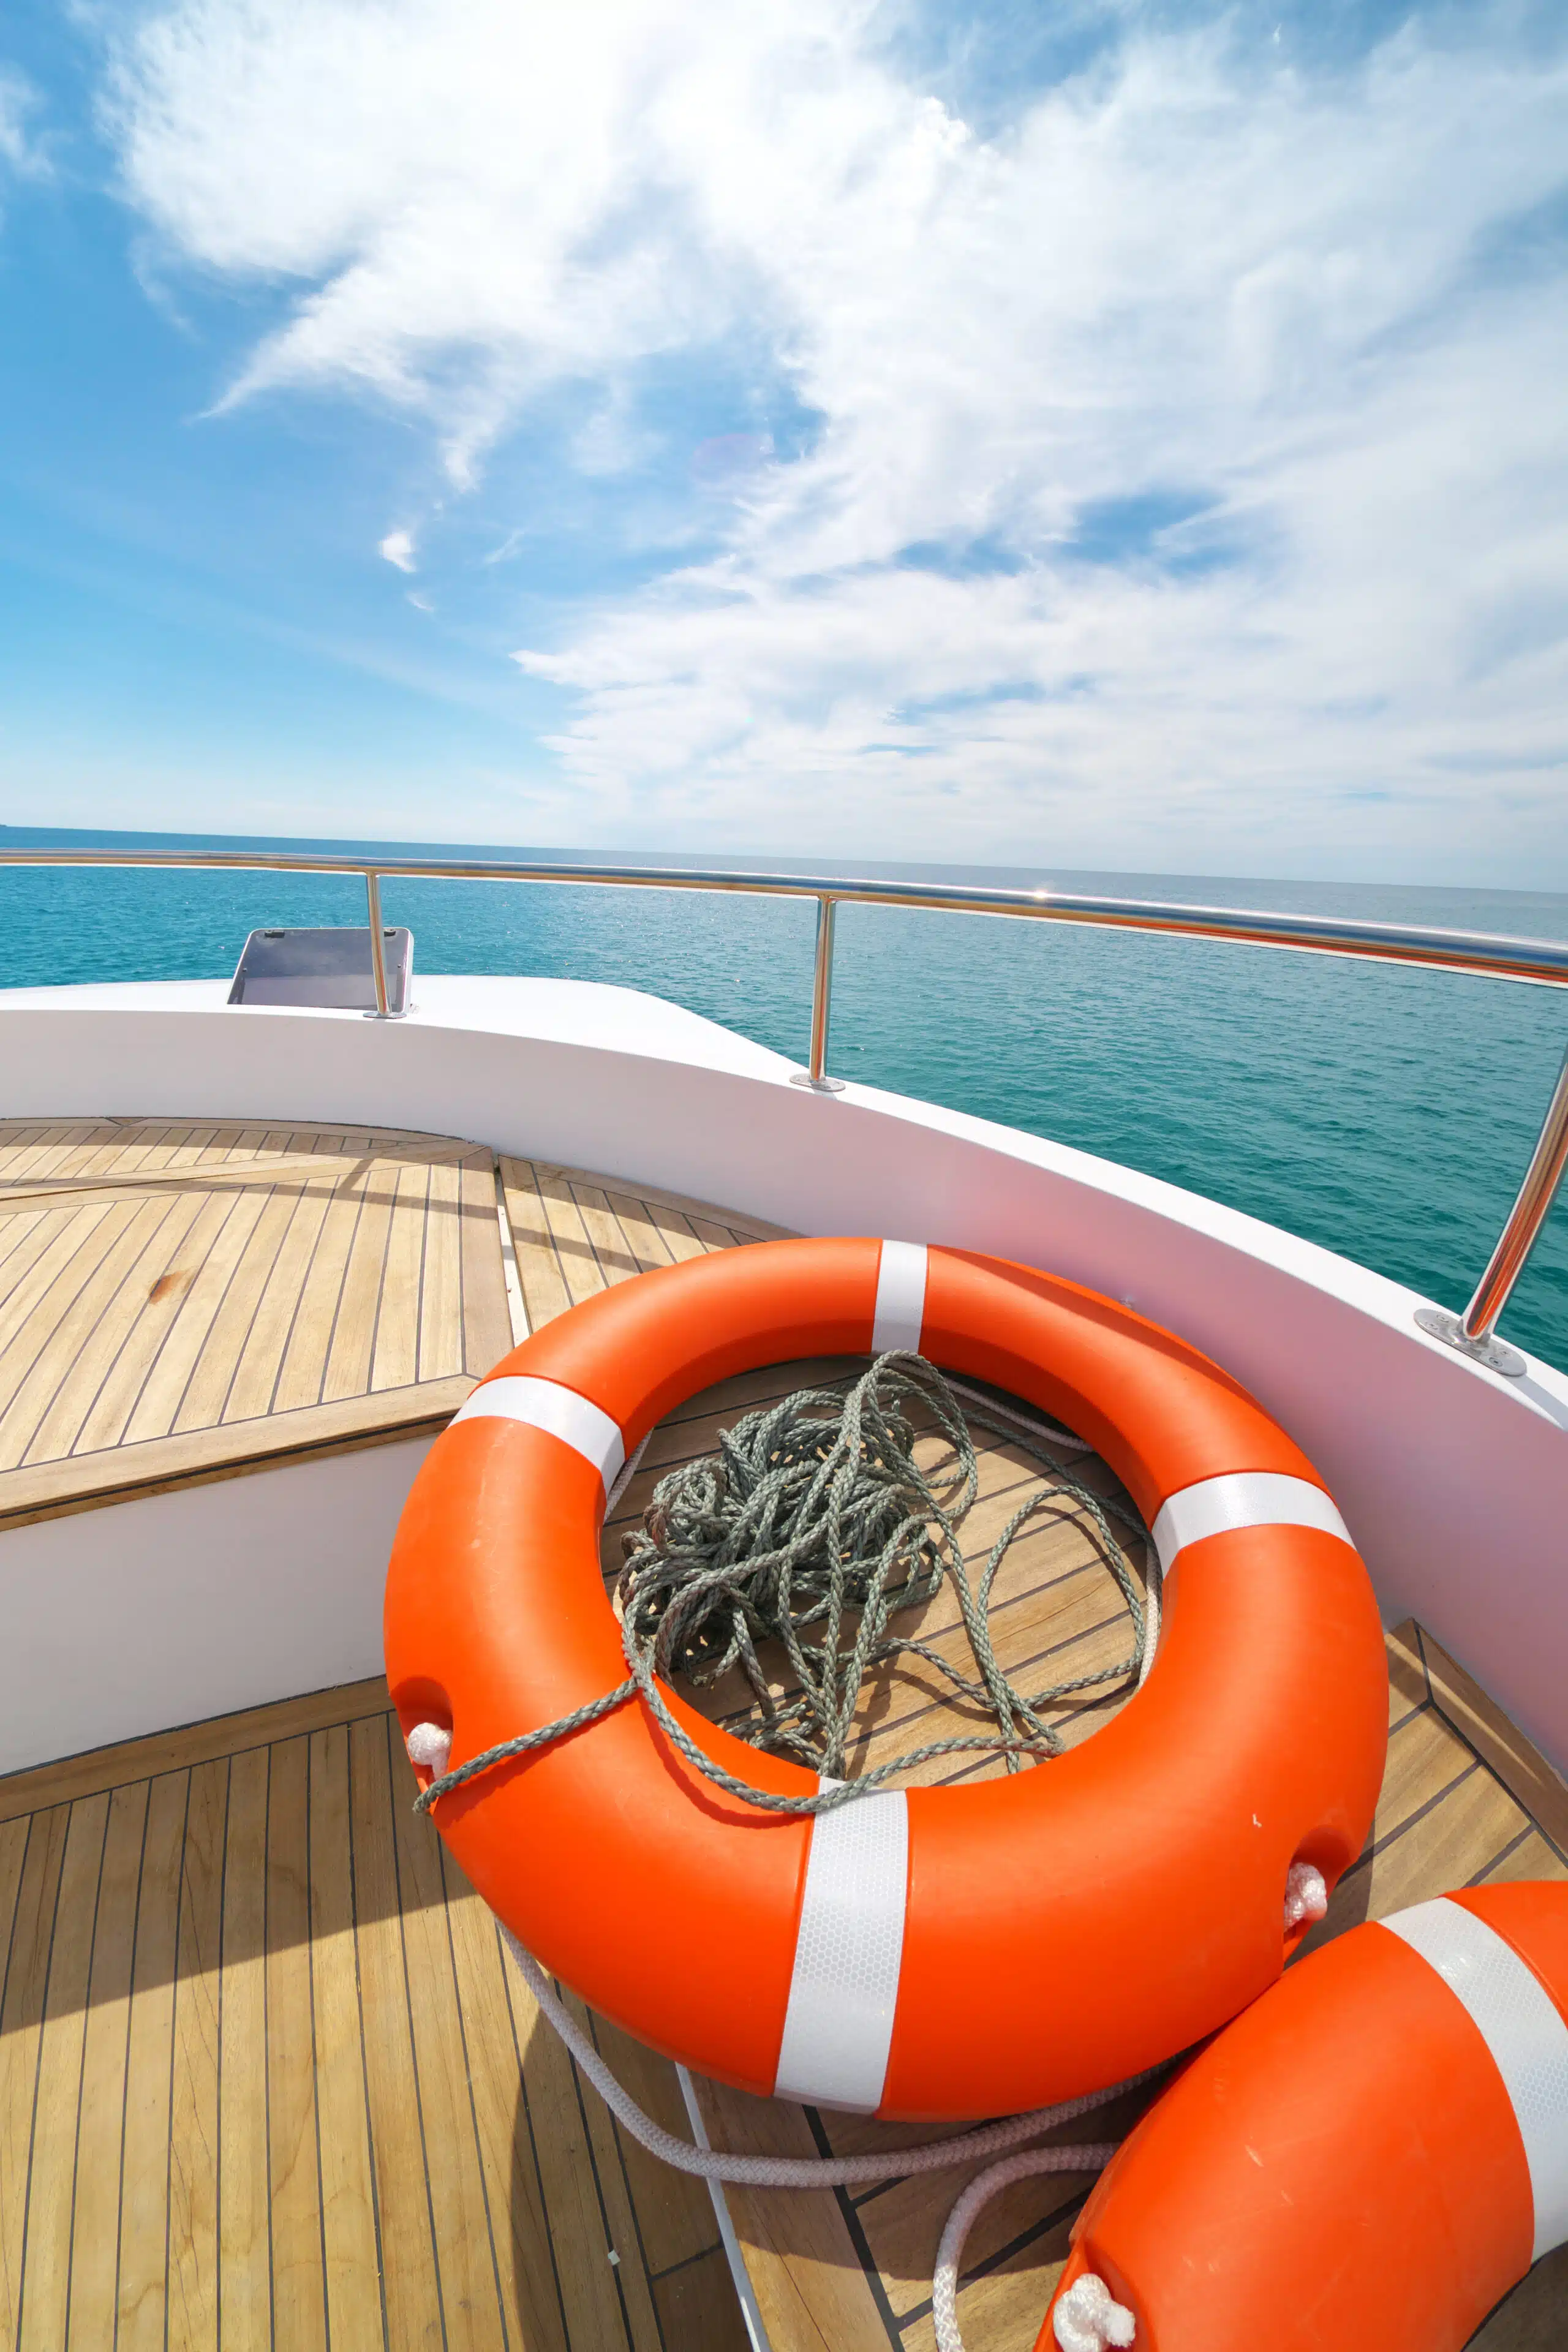 Lifebuoy on the yacht deck.